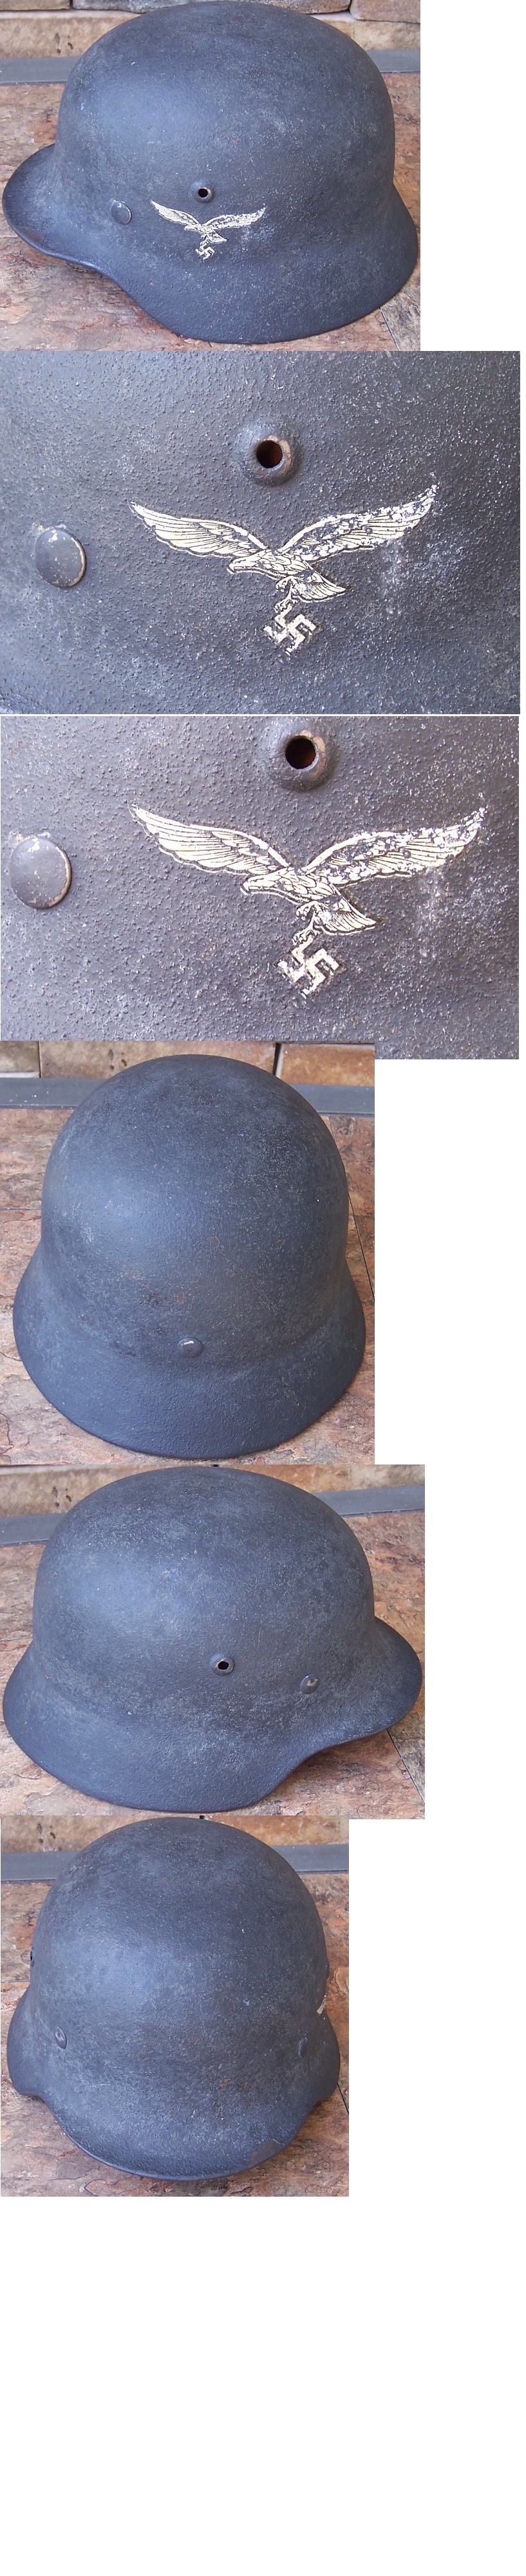 M40 Single Decal Luftwaffe Helmet by ET64